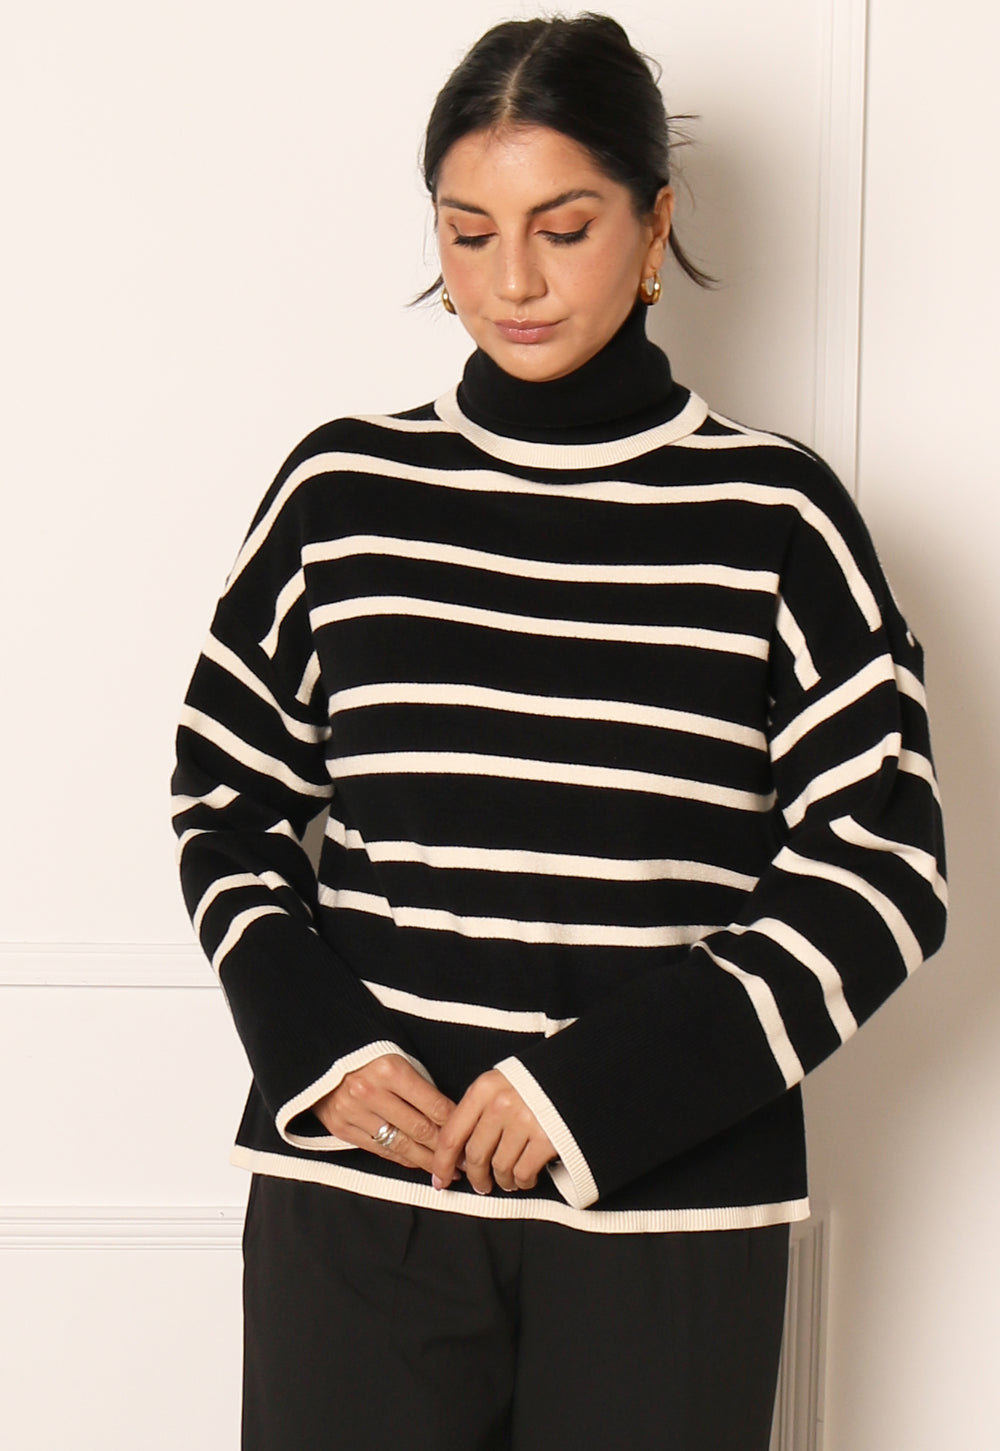 VERO MODA Soft Knit Stripe Rollneck Jumper in Black & Cream - One Nation Clothing